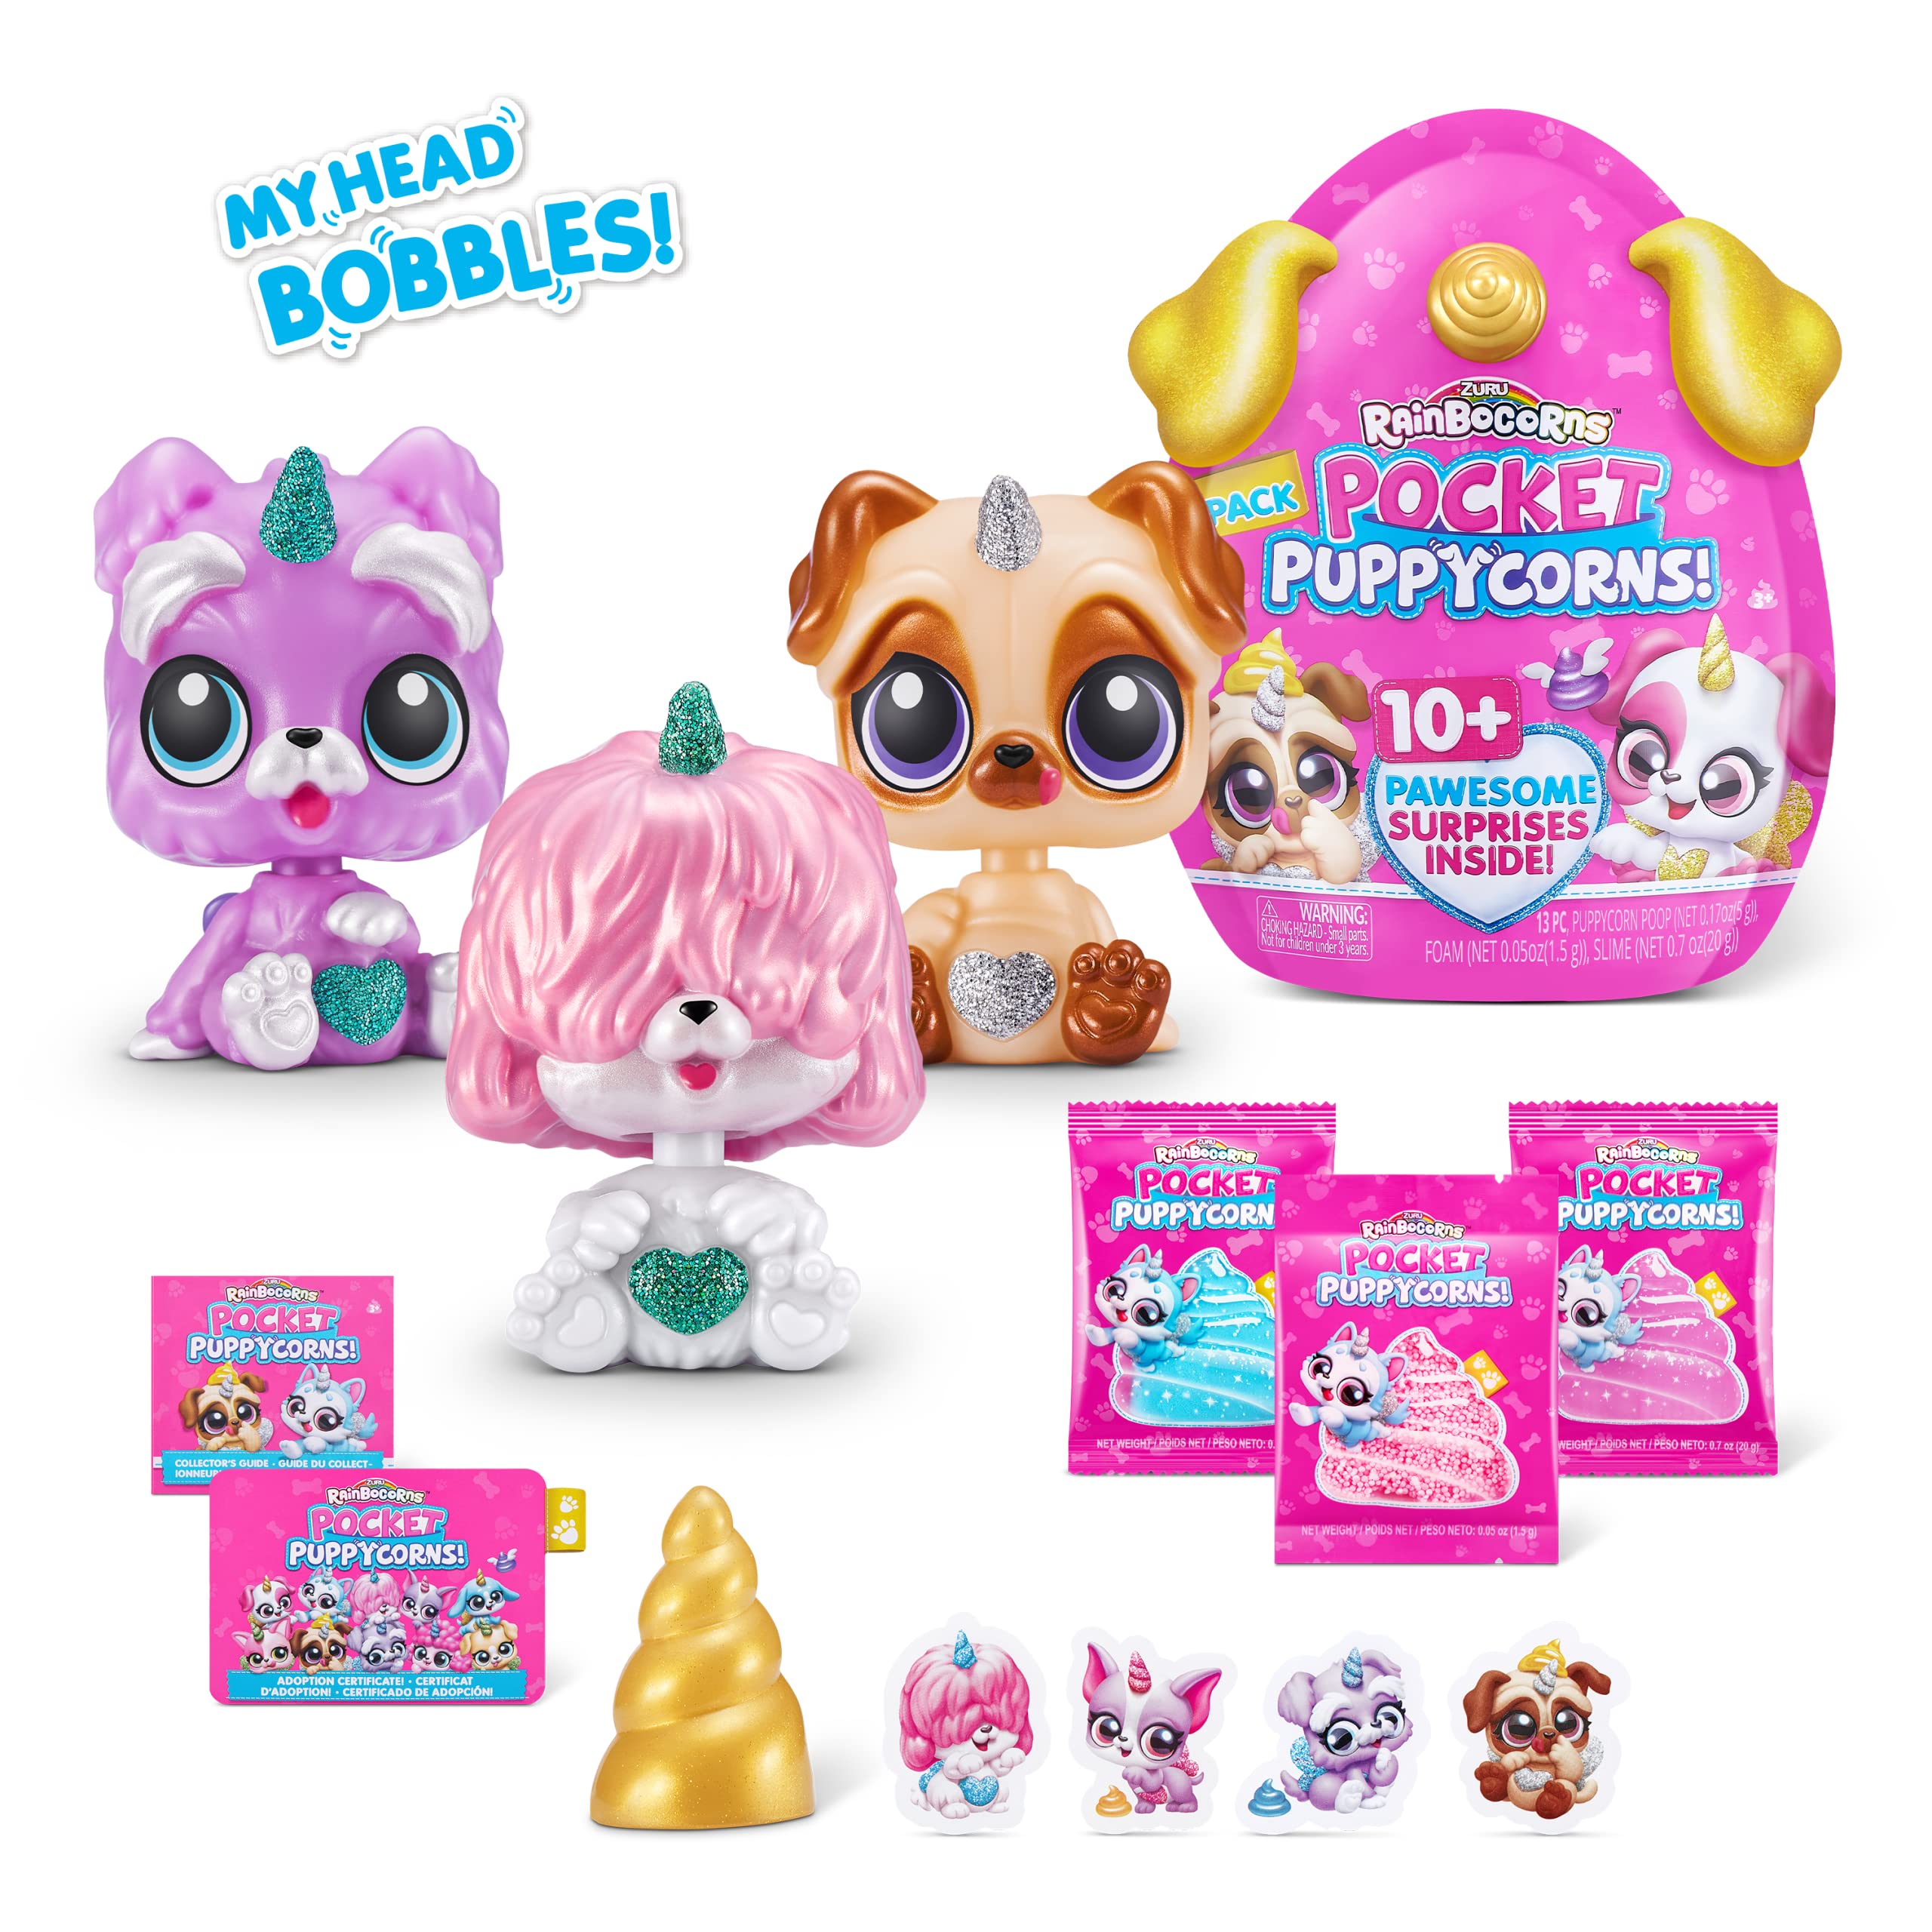 Rainbocorns Pocket Puppycorn 3 Pack by ZURU Toy Puppy Dog Mini Unboxing Girls Gifting Idea, Toys for Girls, Kid's Birthday Gift